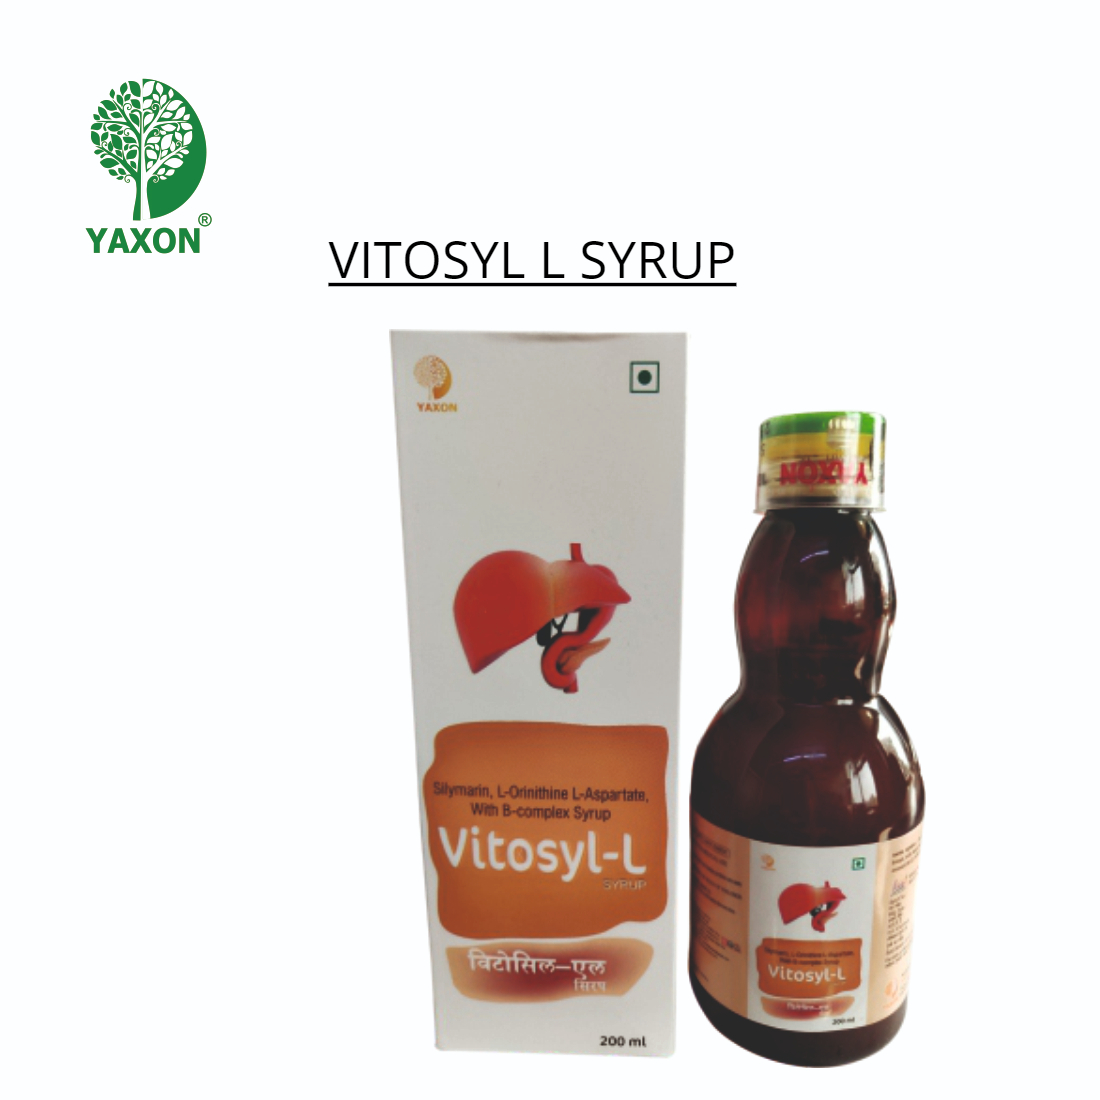 YAXON VITOSYL L LIVER Syrup 200ml